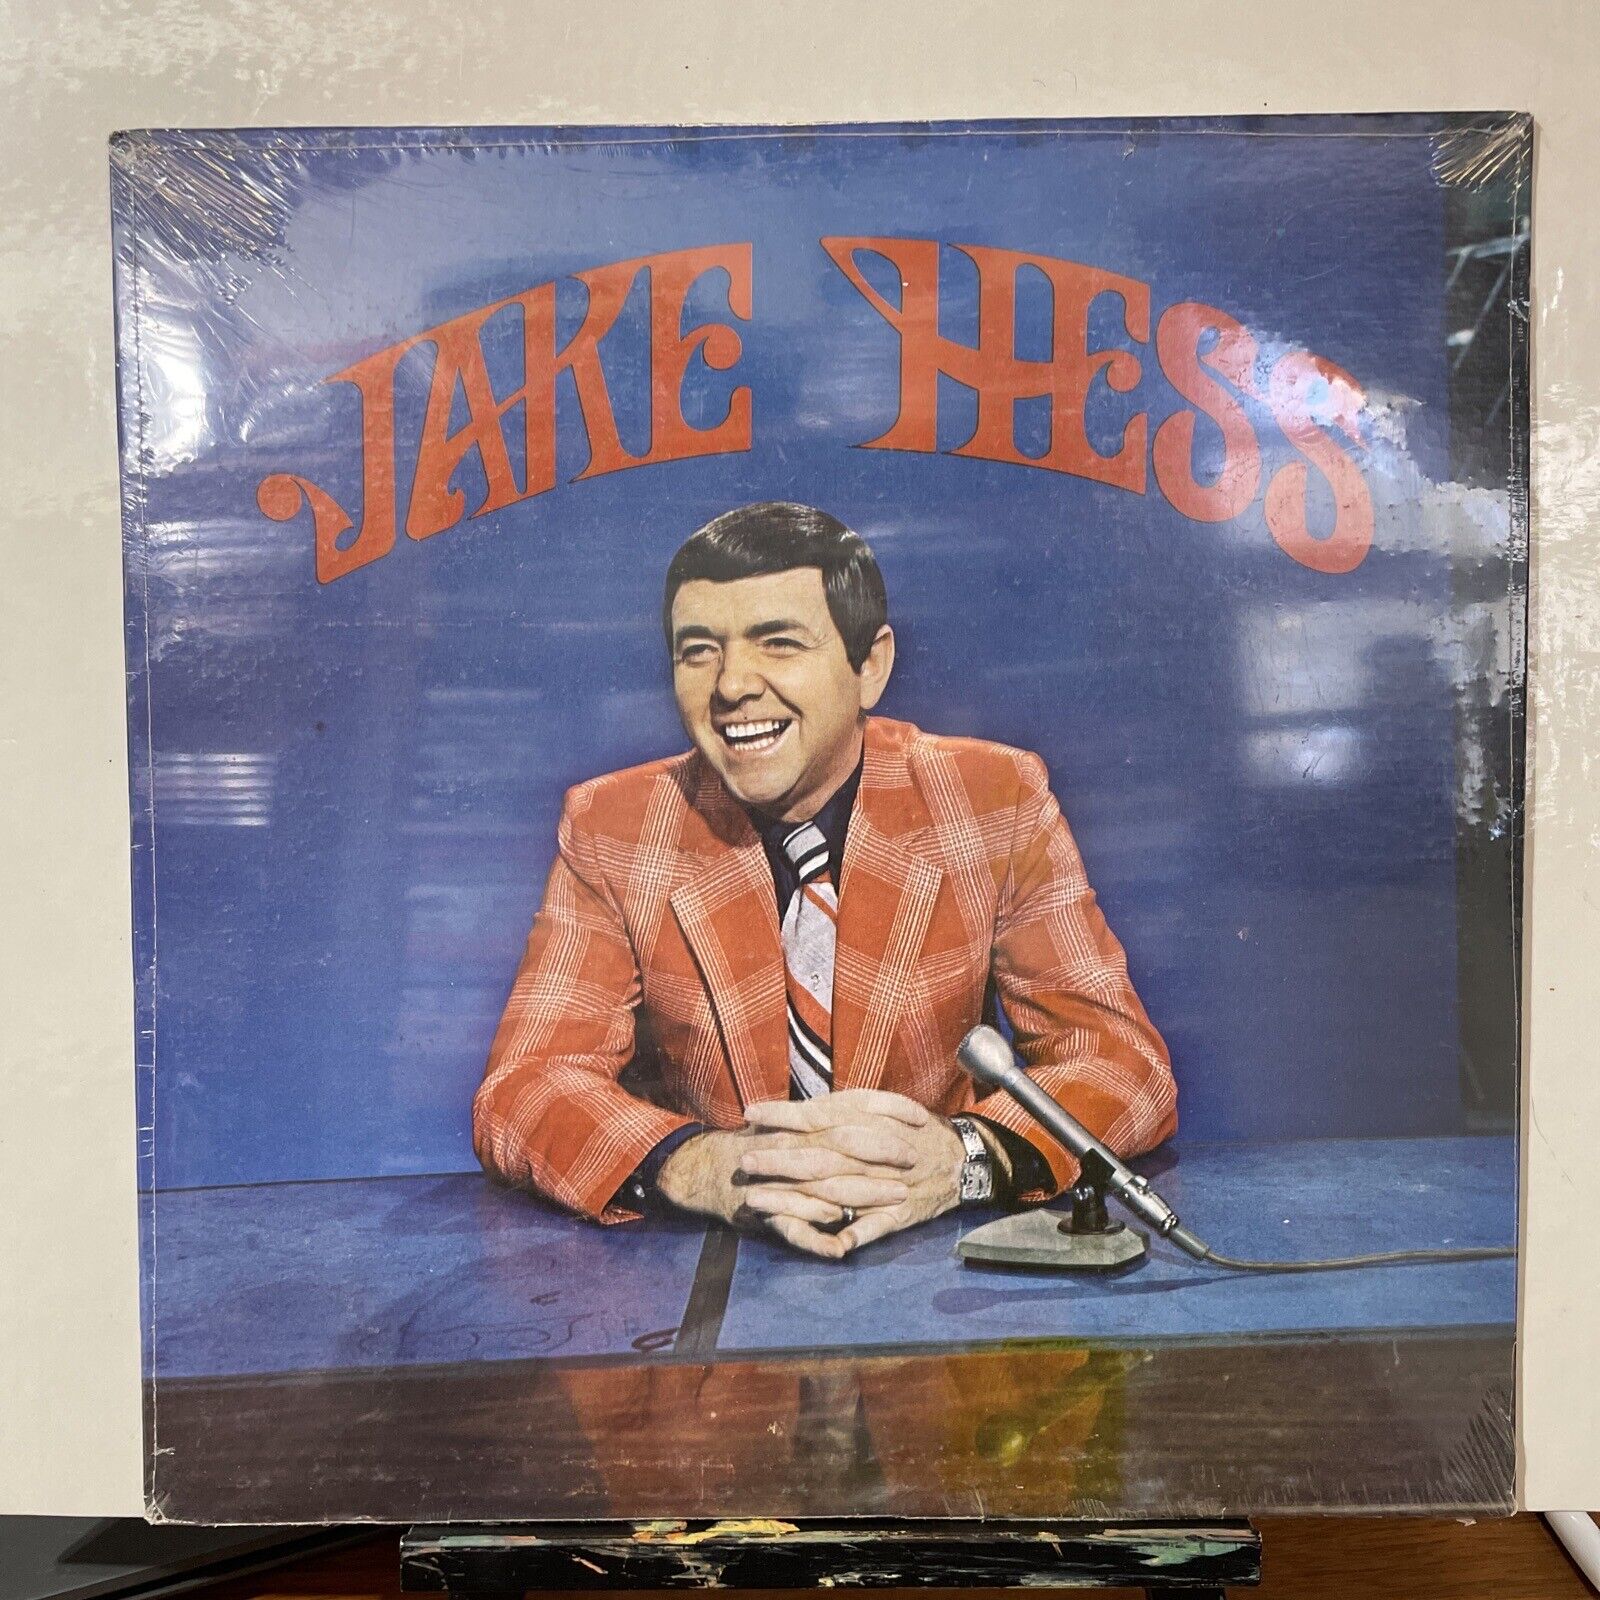 Jake Hess by Jake Hess (LP, Vinyl Record, 1974, CAM Records) Gospel